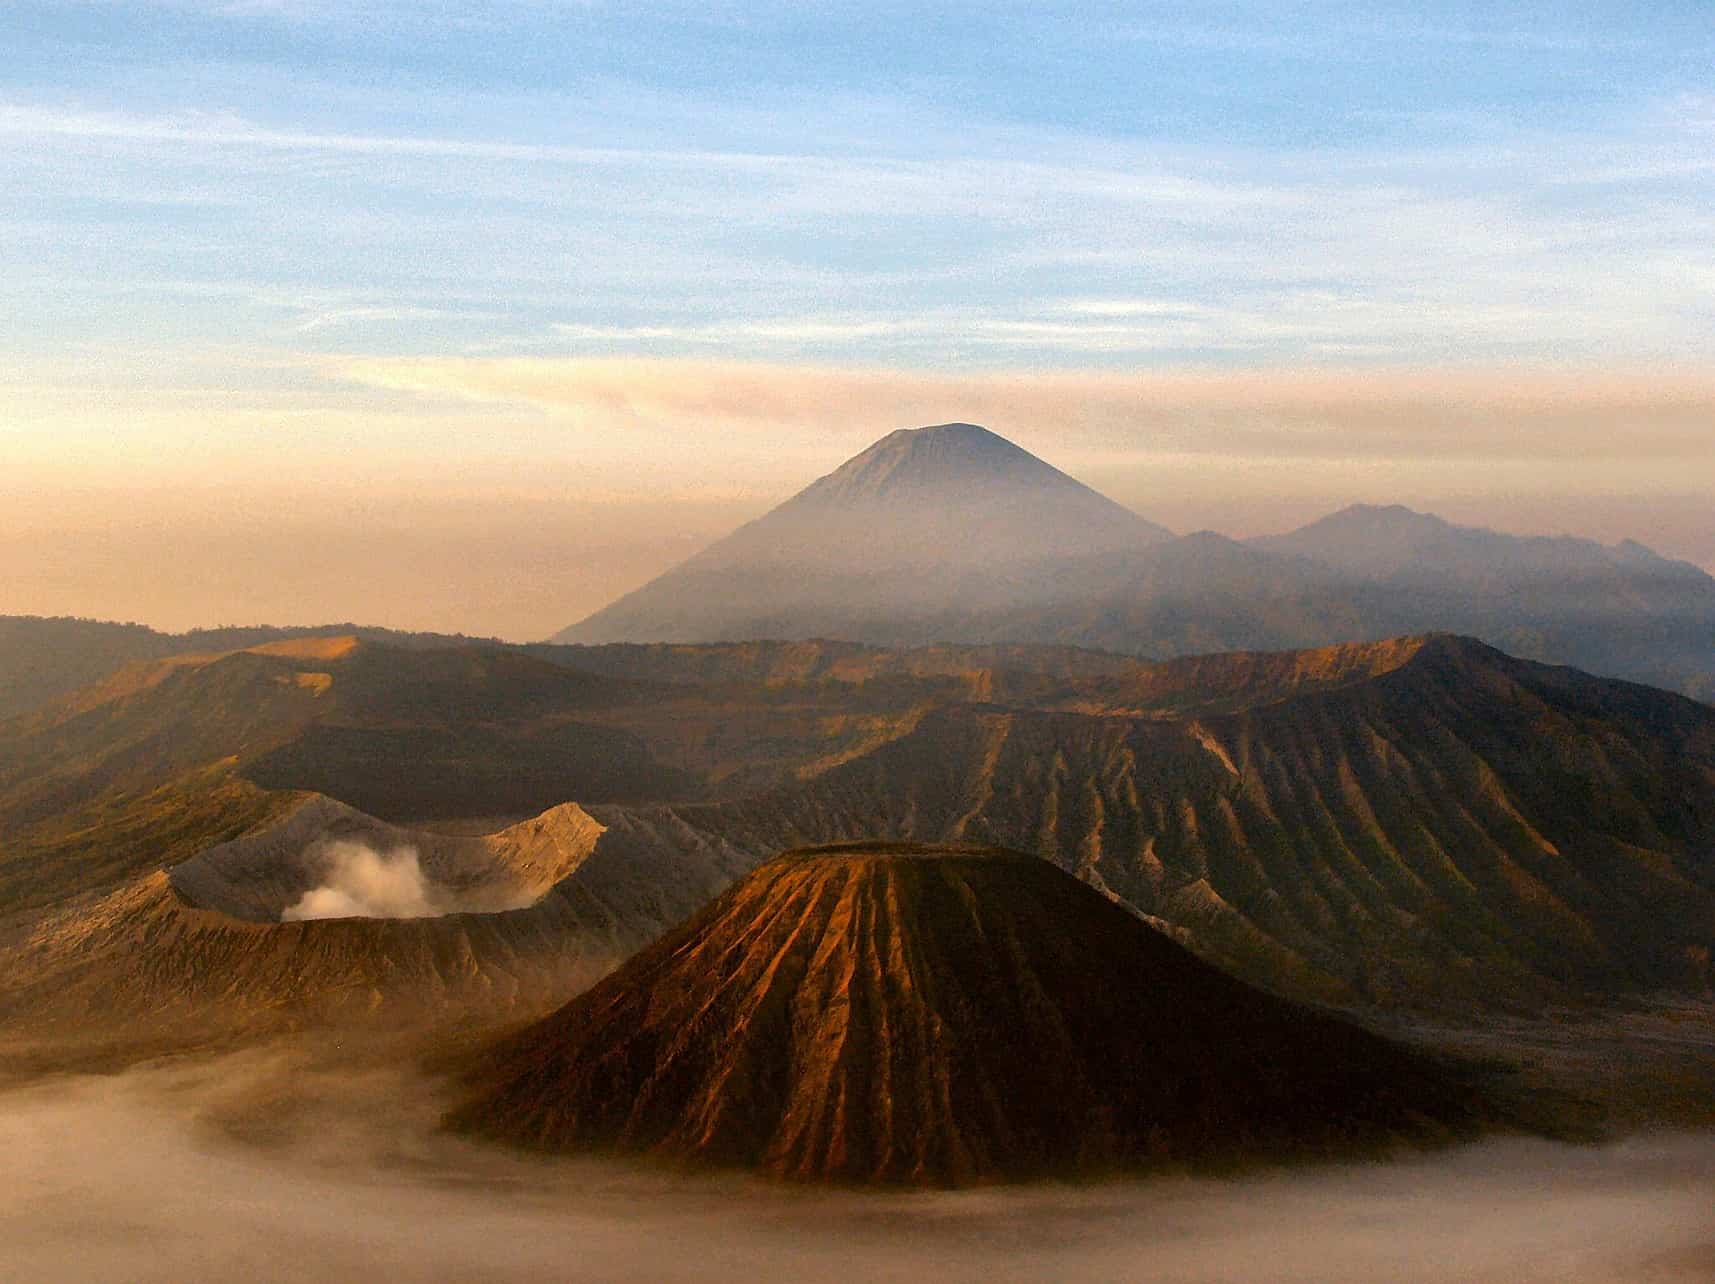 Volcano Mount Merapi near Yogyakarta, Indonesia.